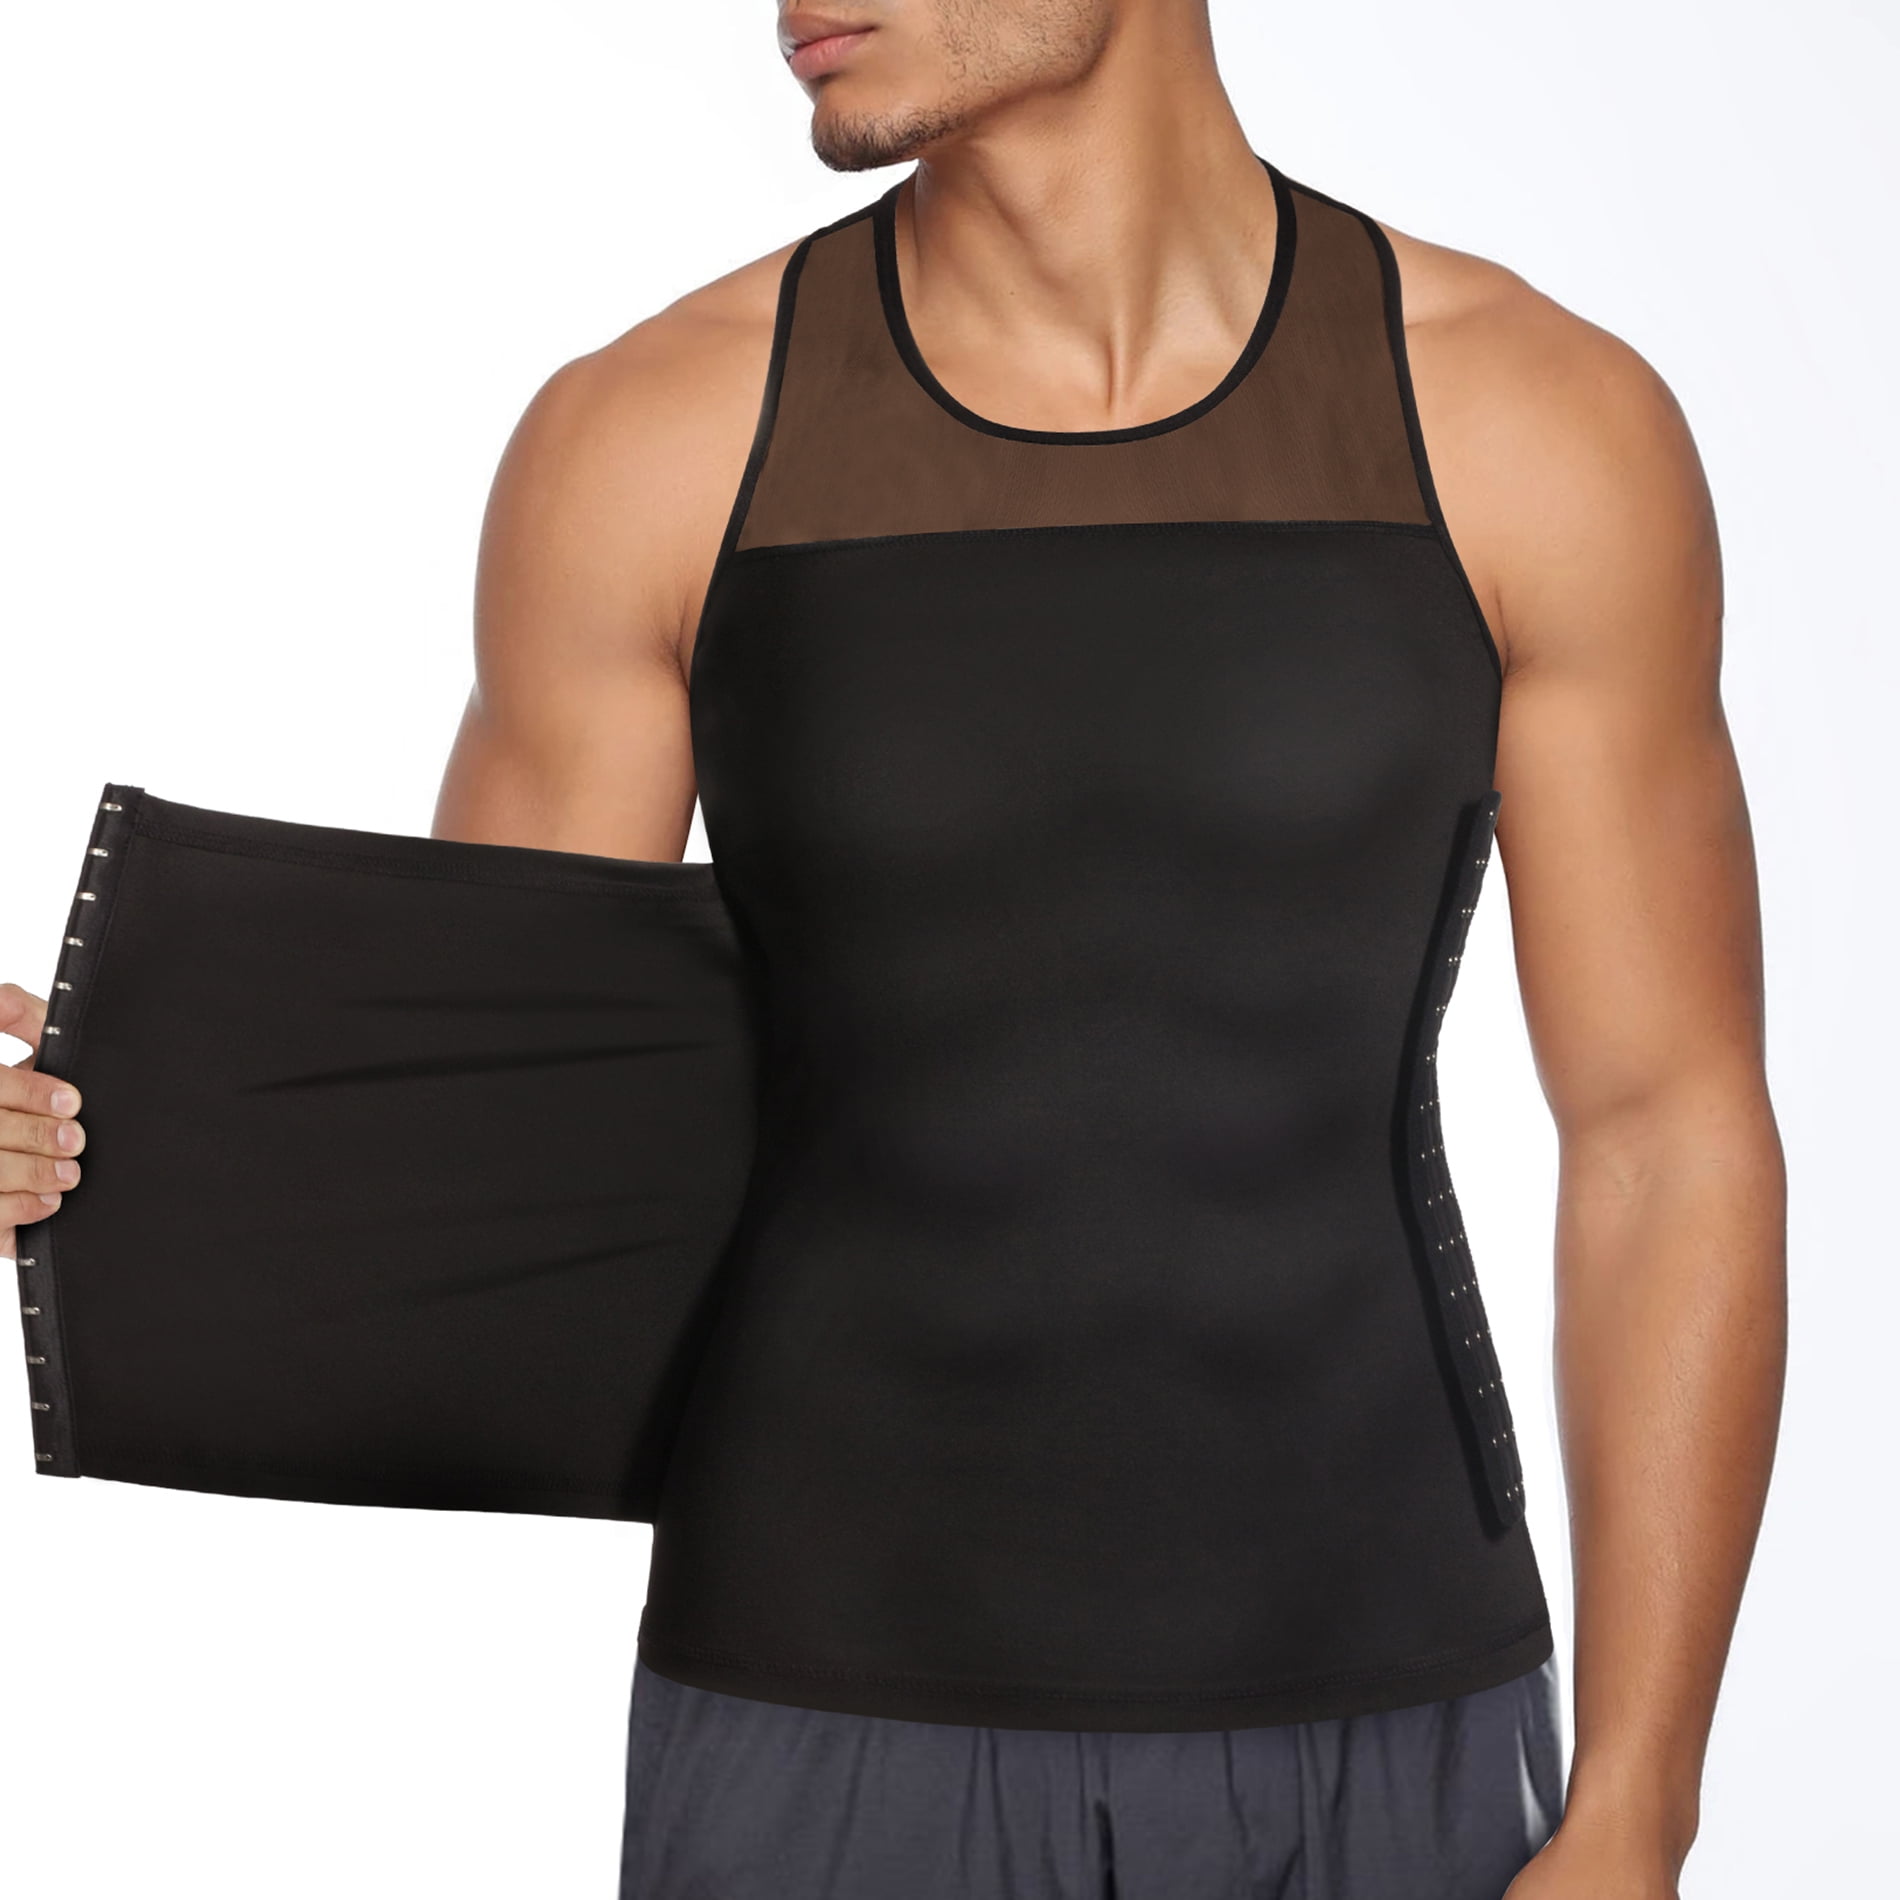 Men's Slimming Compression Vest for Man Boobs Moobs Tummy Control Tank Underwear 